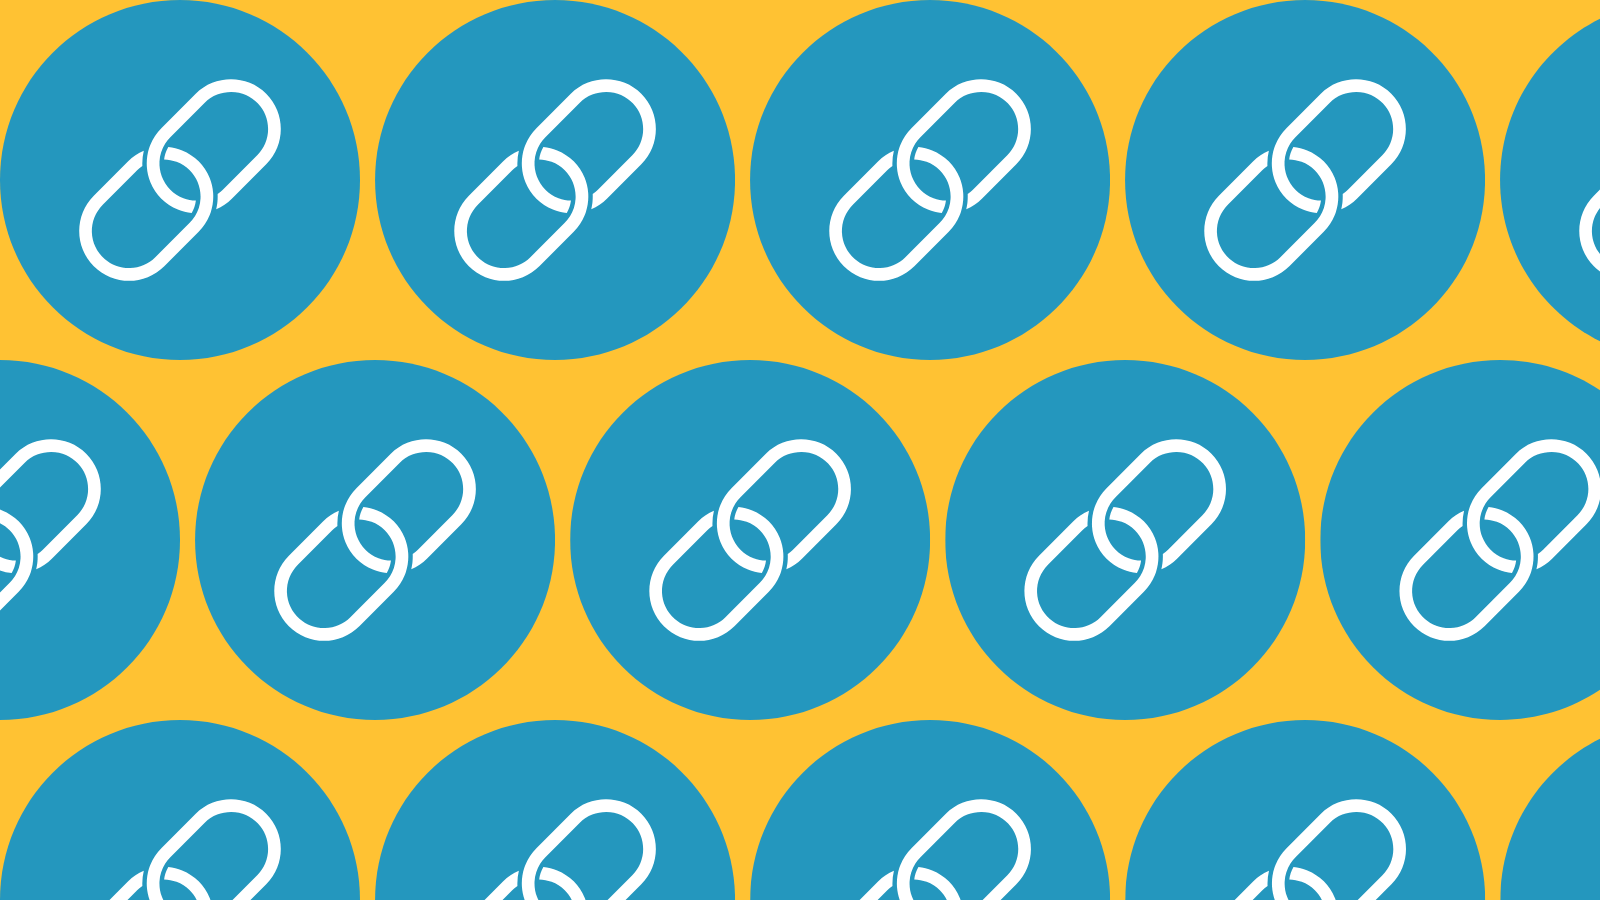 Three rows of a link symbol